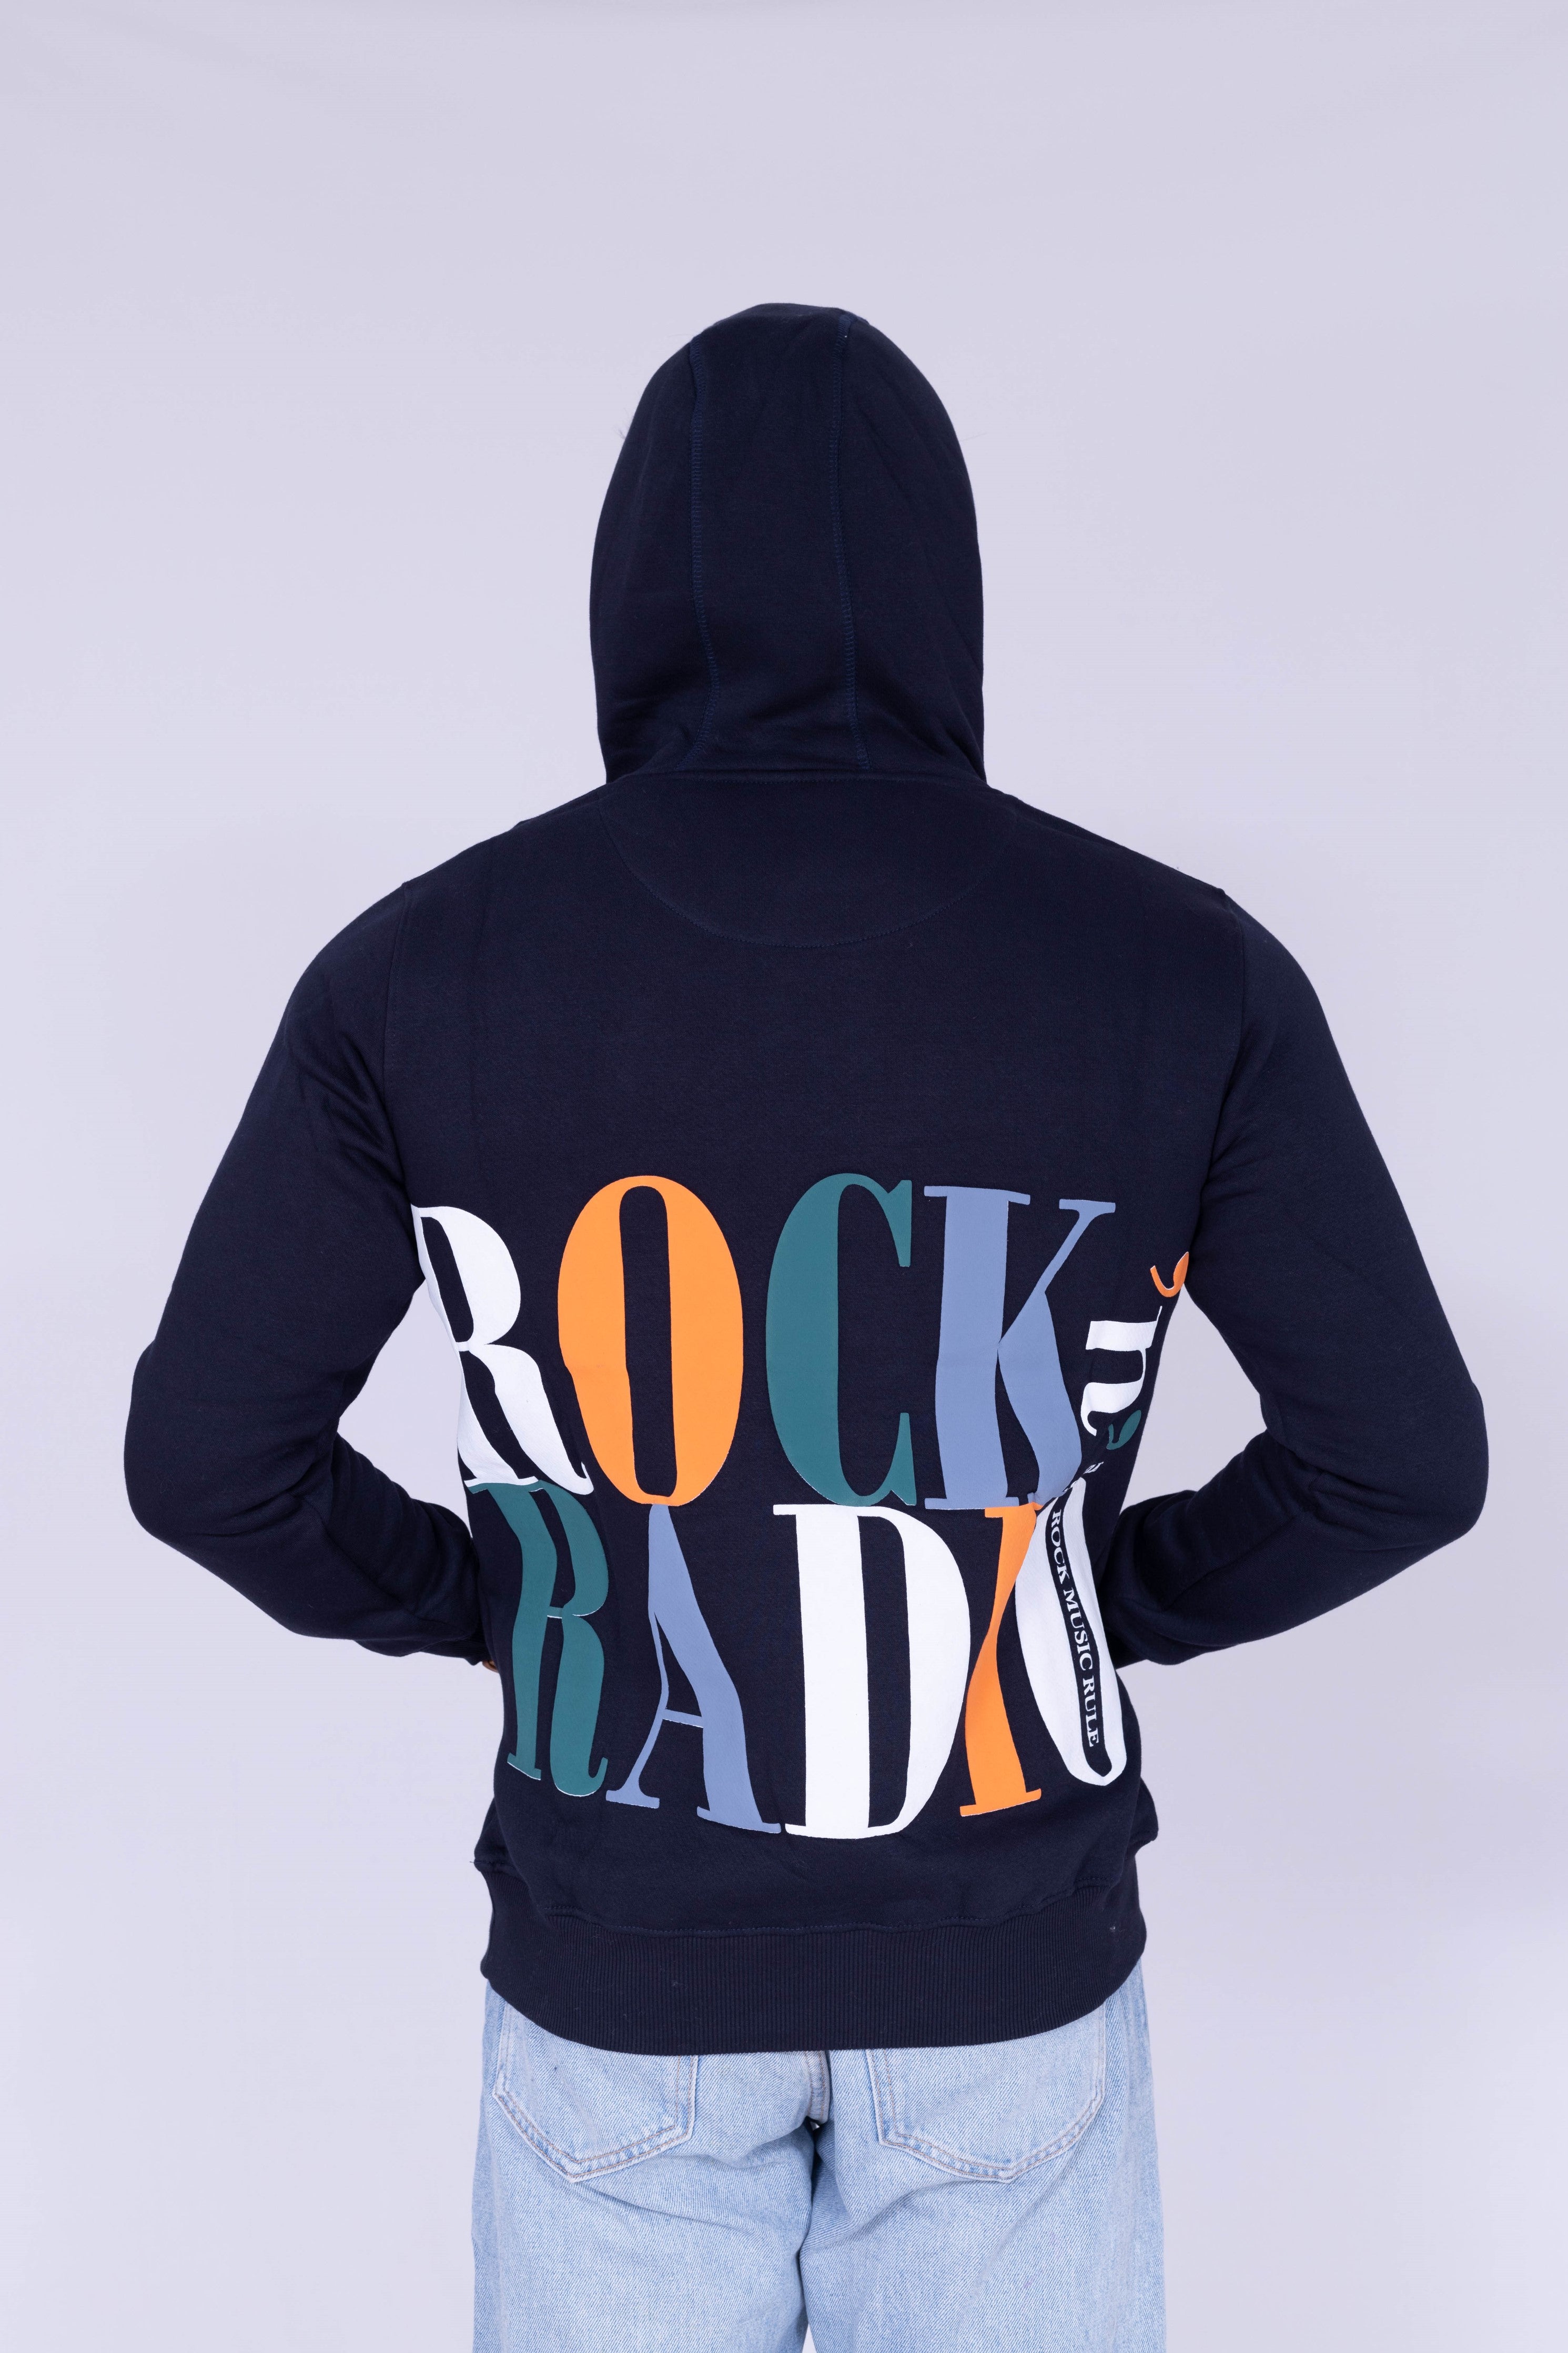 Rock Radio Typography Navy hoodie